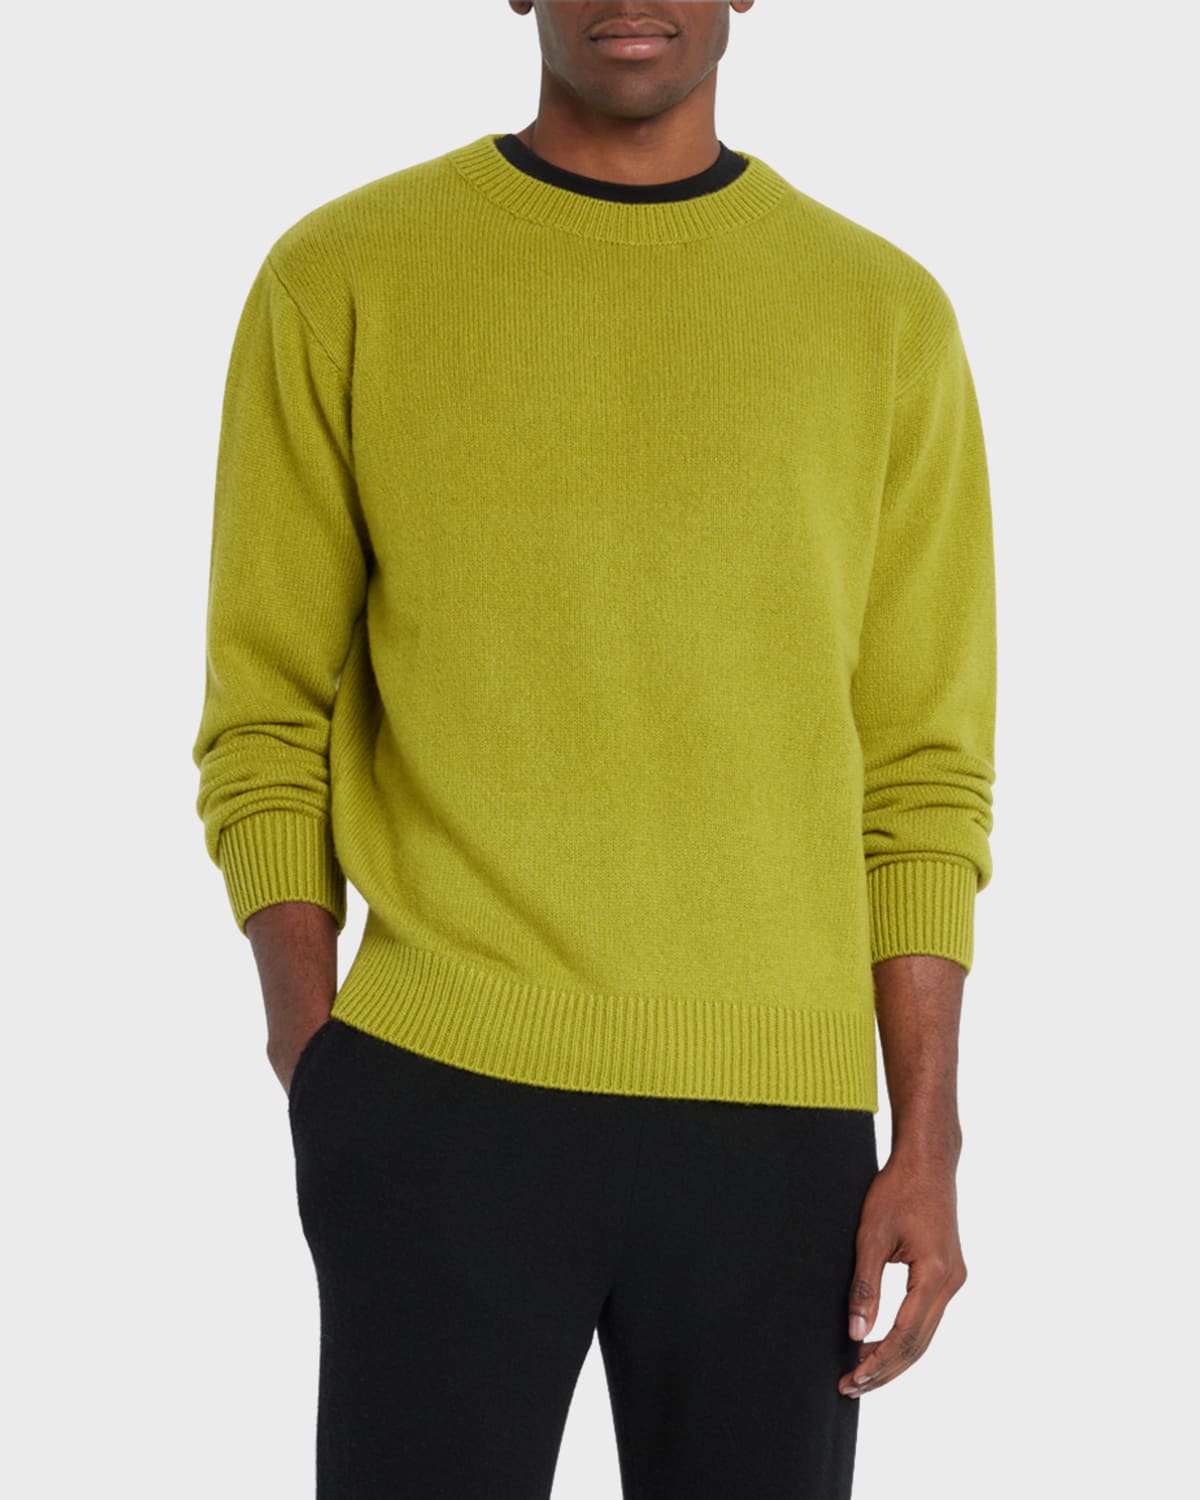 Men's Heavyweight Cashmere Sweater